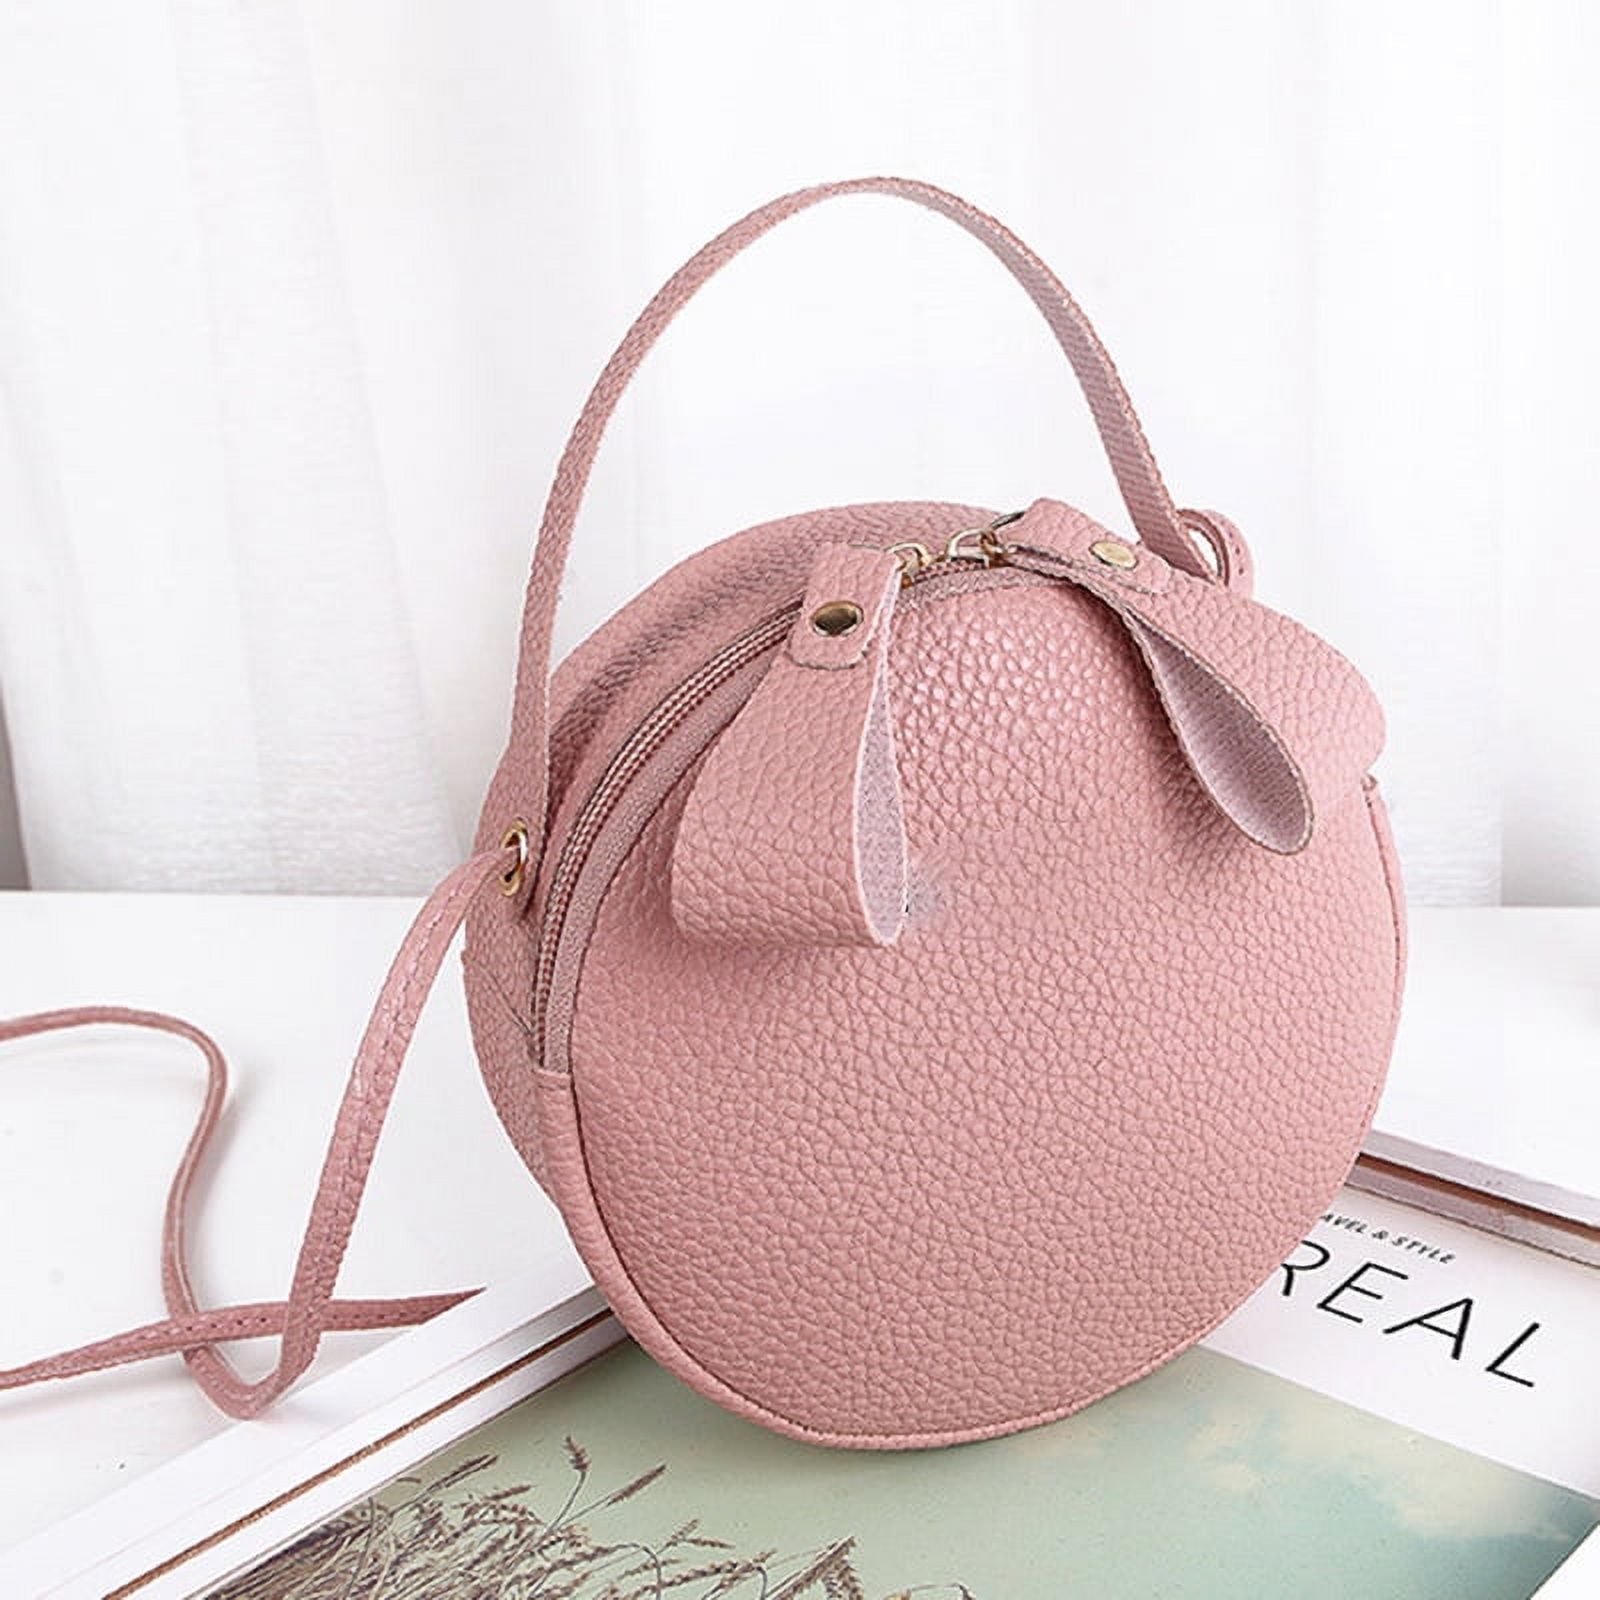 CKCL Fashion Women Handbag Small Round Circle Bag Girl Cute Shoulder Messenger Bag Pink, Women's